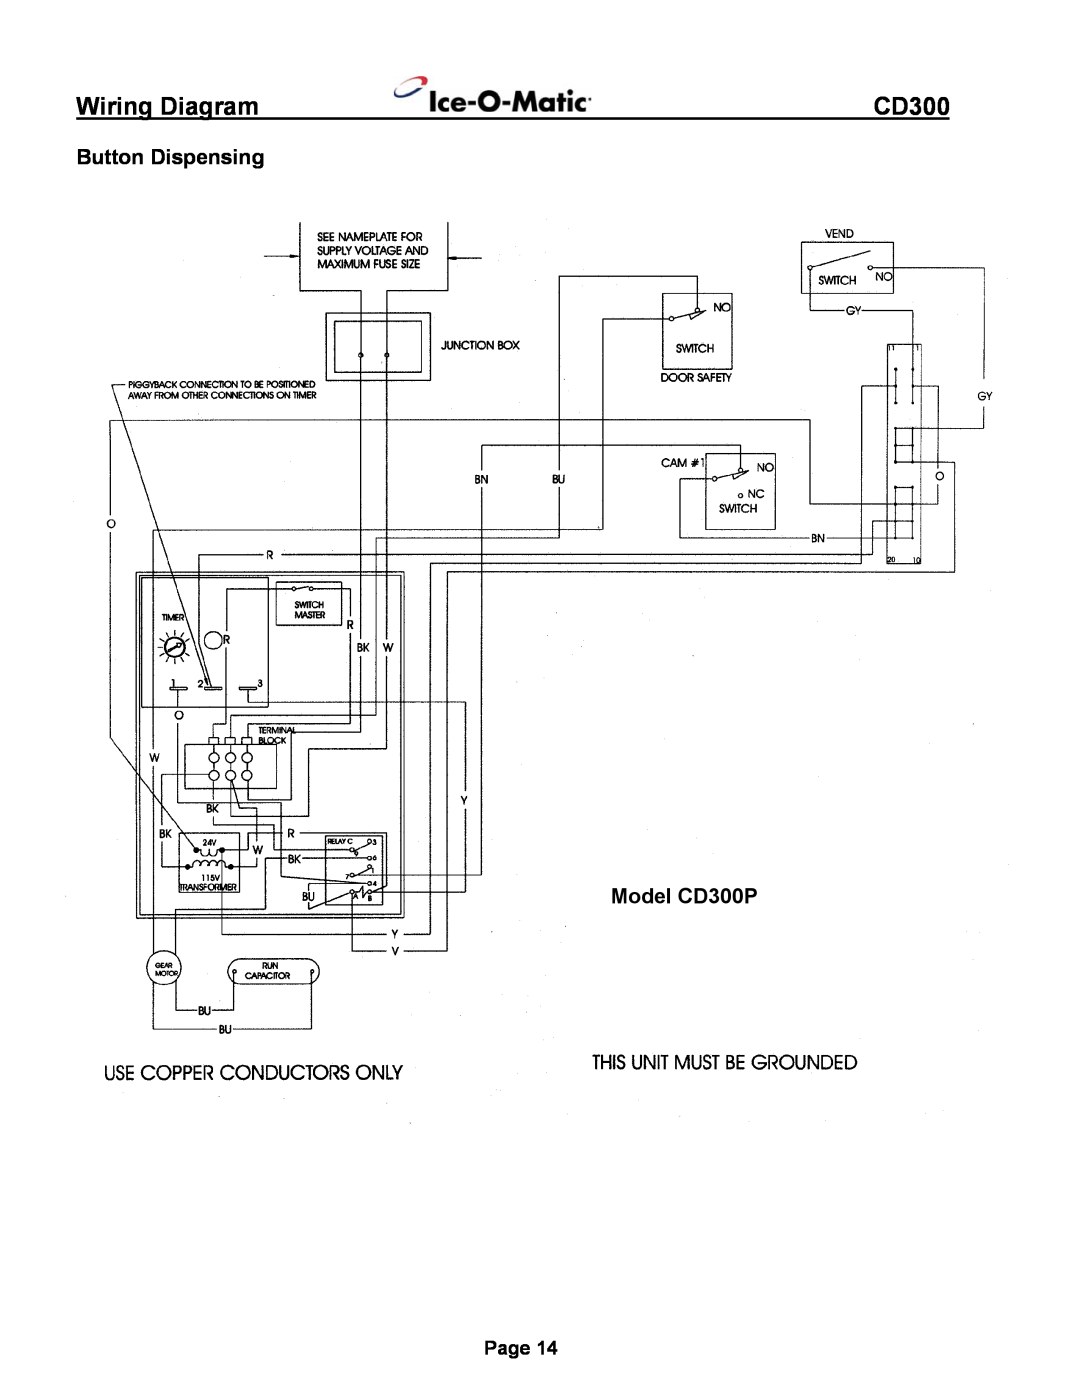 Ice-O-Matic installation manual Wiring Diagram, Button Dispensing Model CD300P 